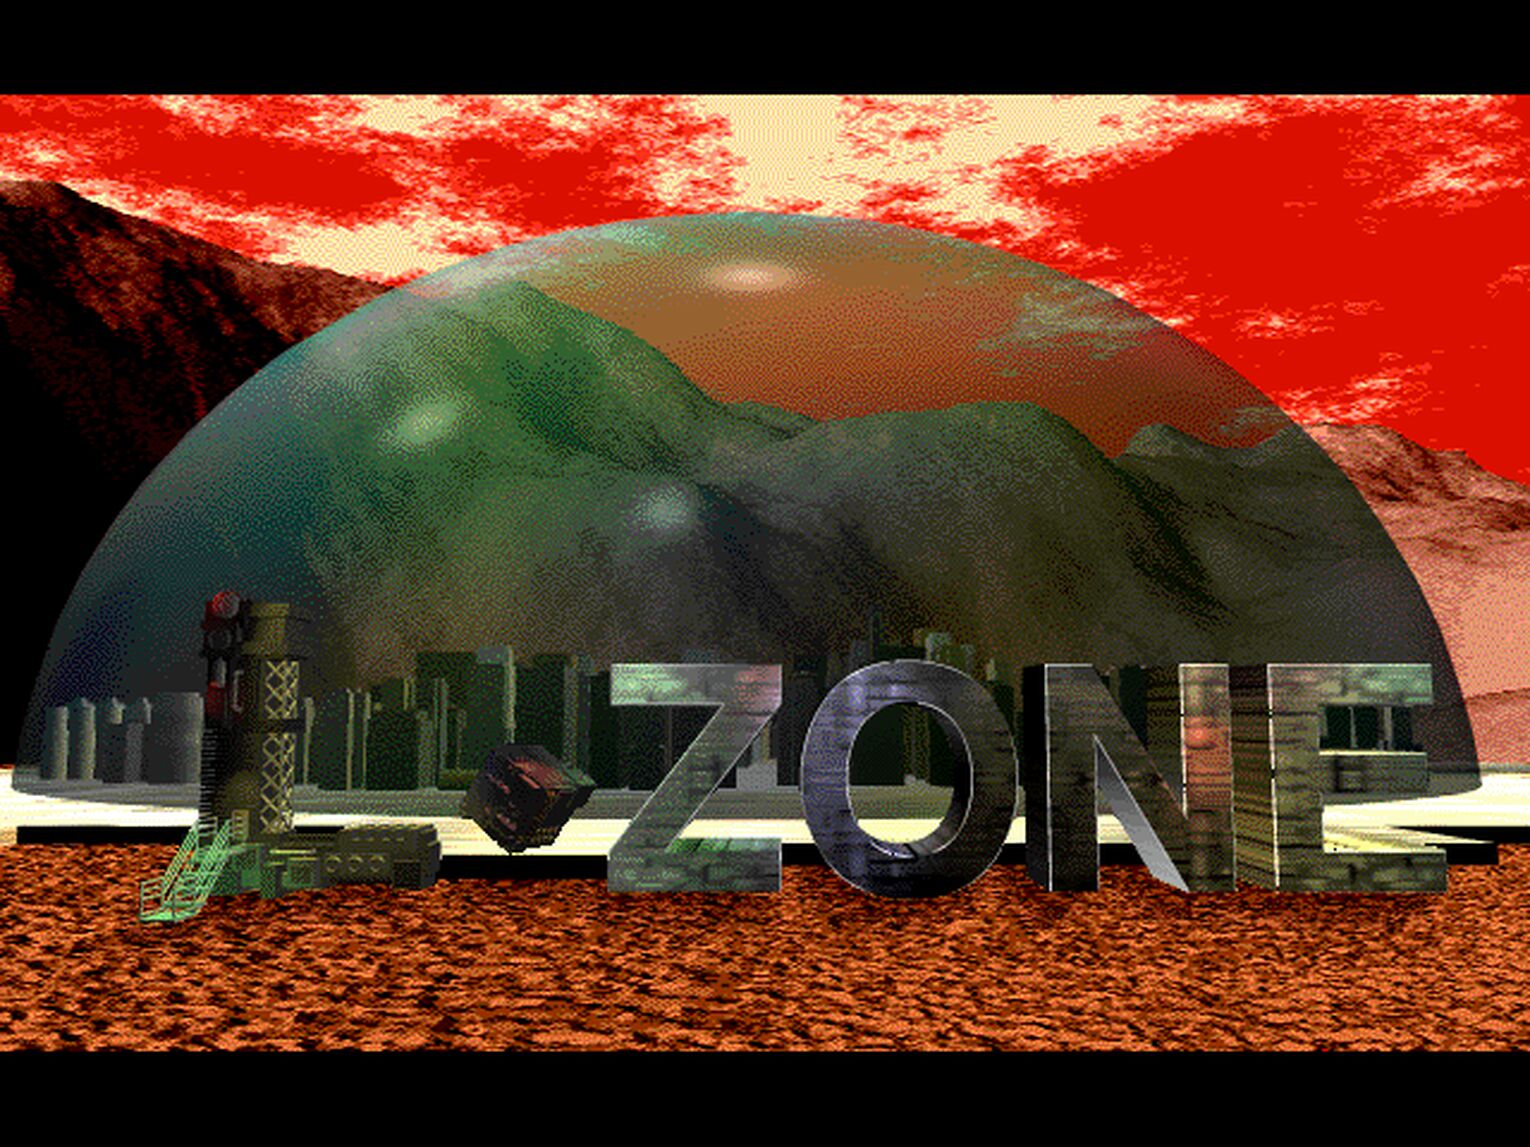 L-Zone